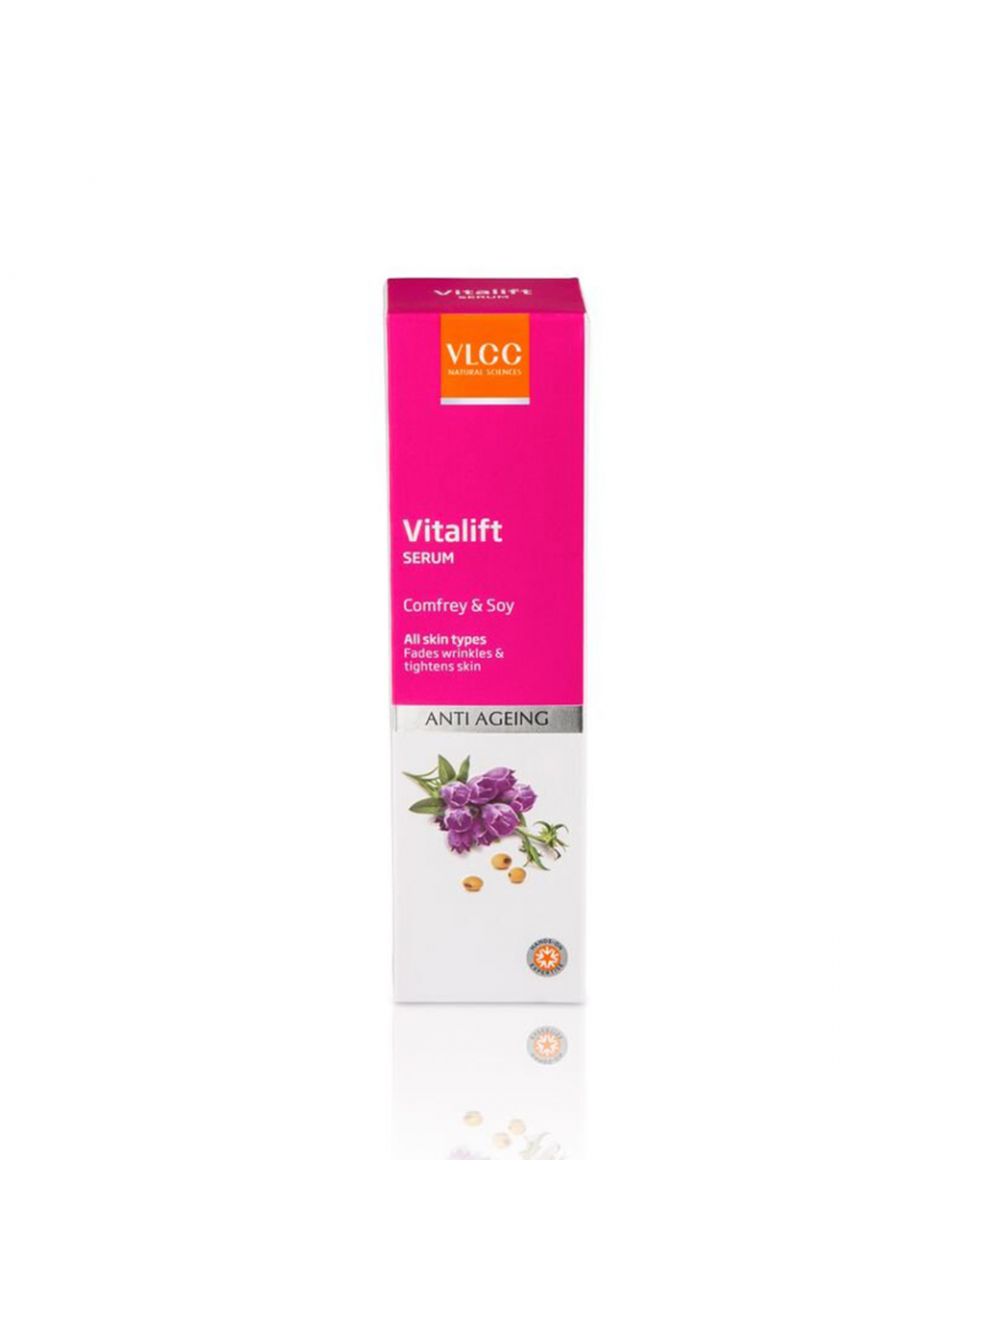 VLCC Anti Aging Vitalift Serum (50ml) - Niram